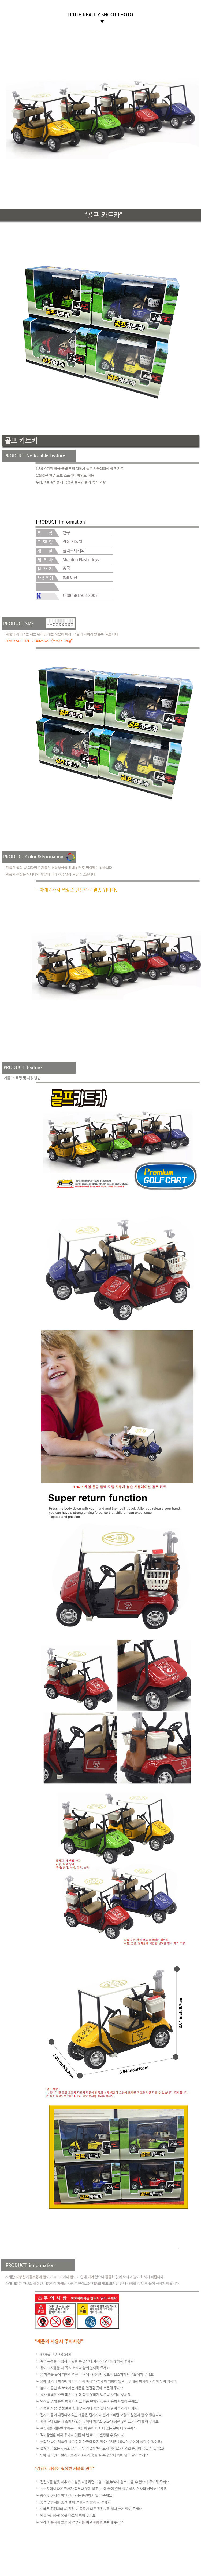 golfcartcar.jpg